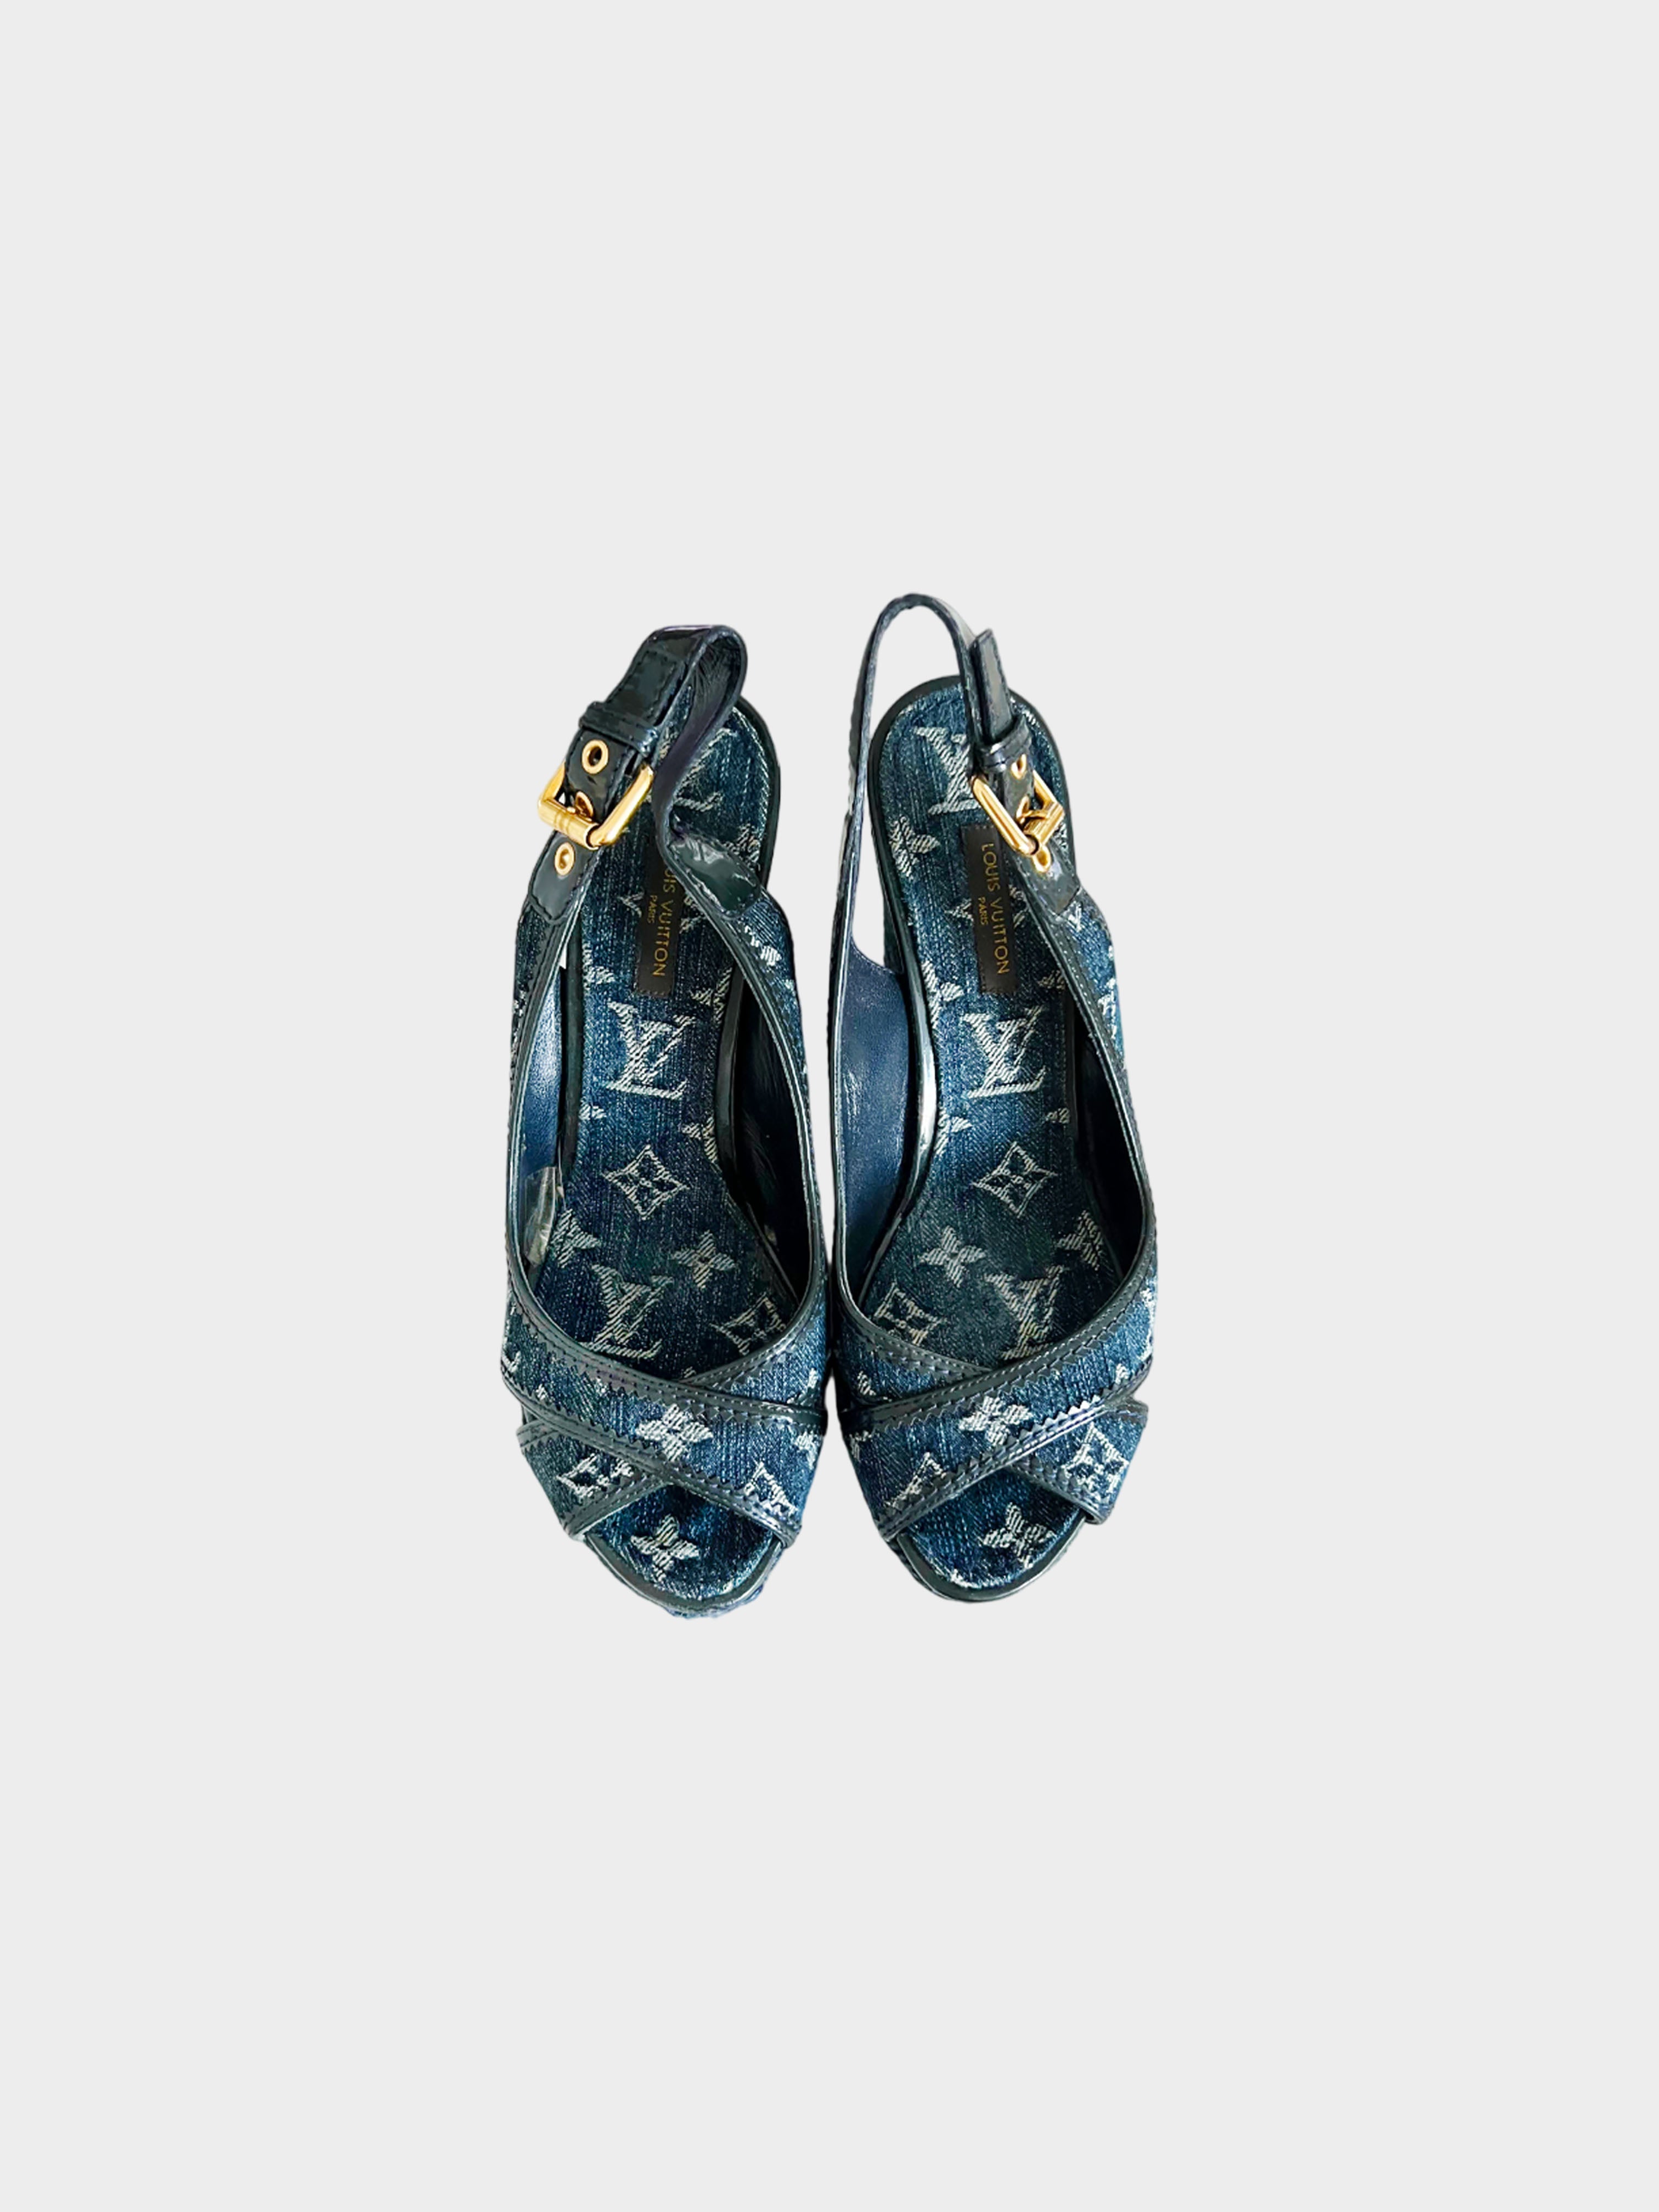 Louis Vuitton Early 2010s Navy Denim Slingback Espadrille Wedge Sandals